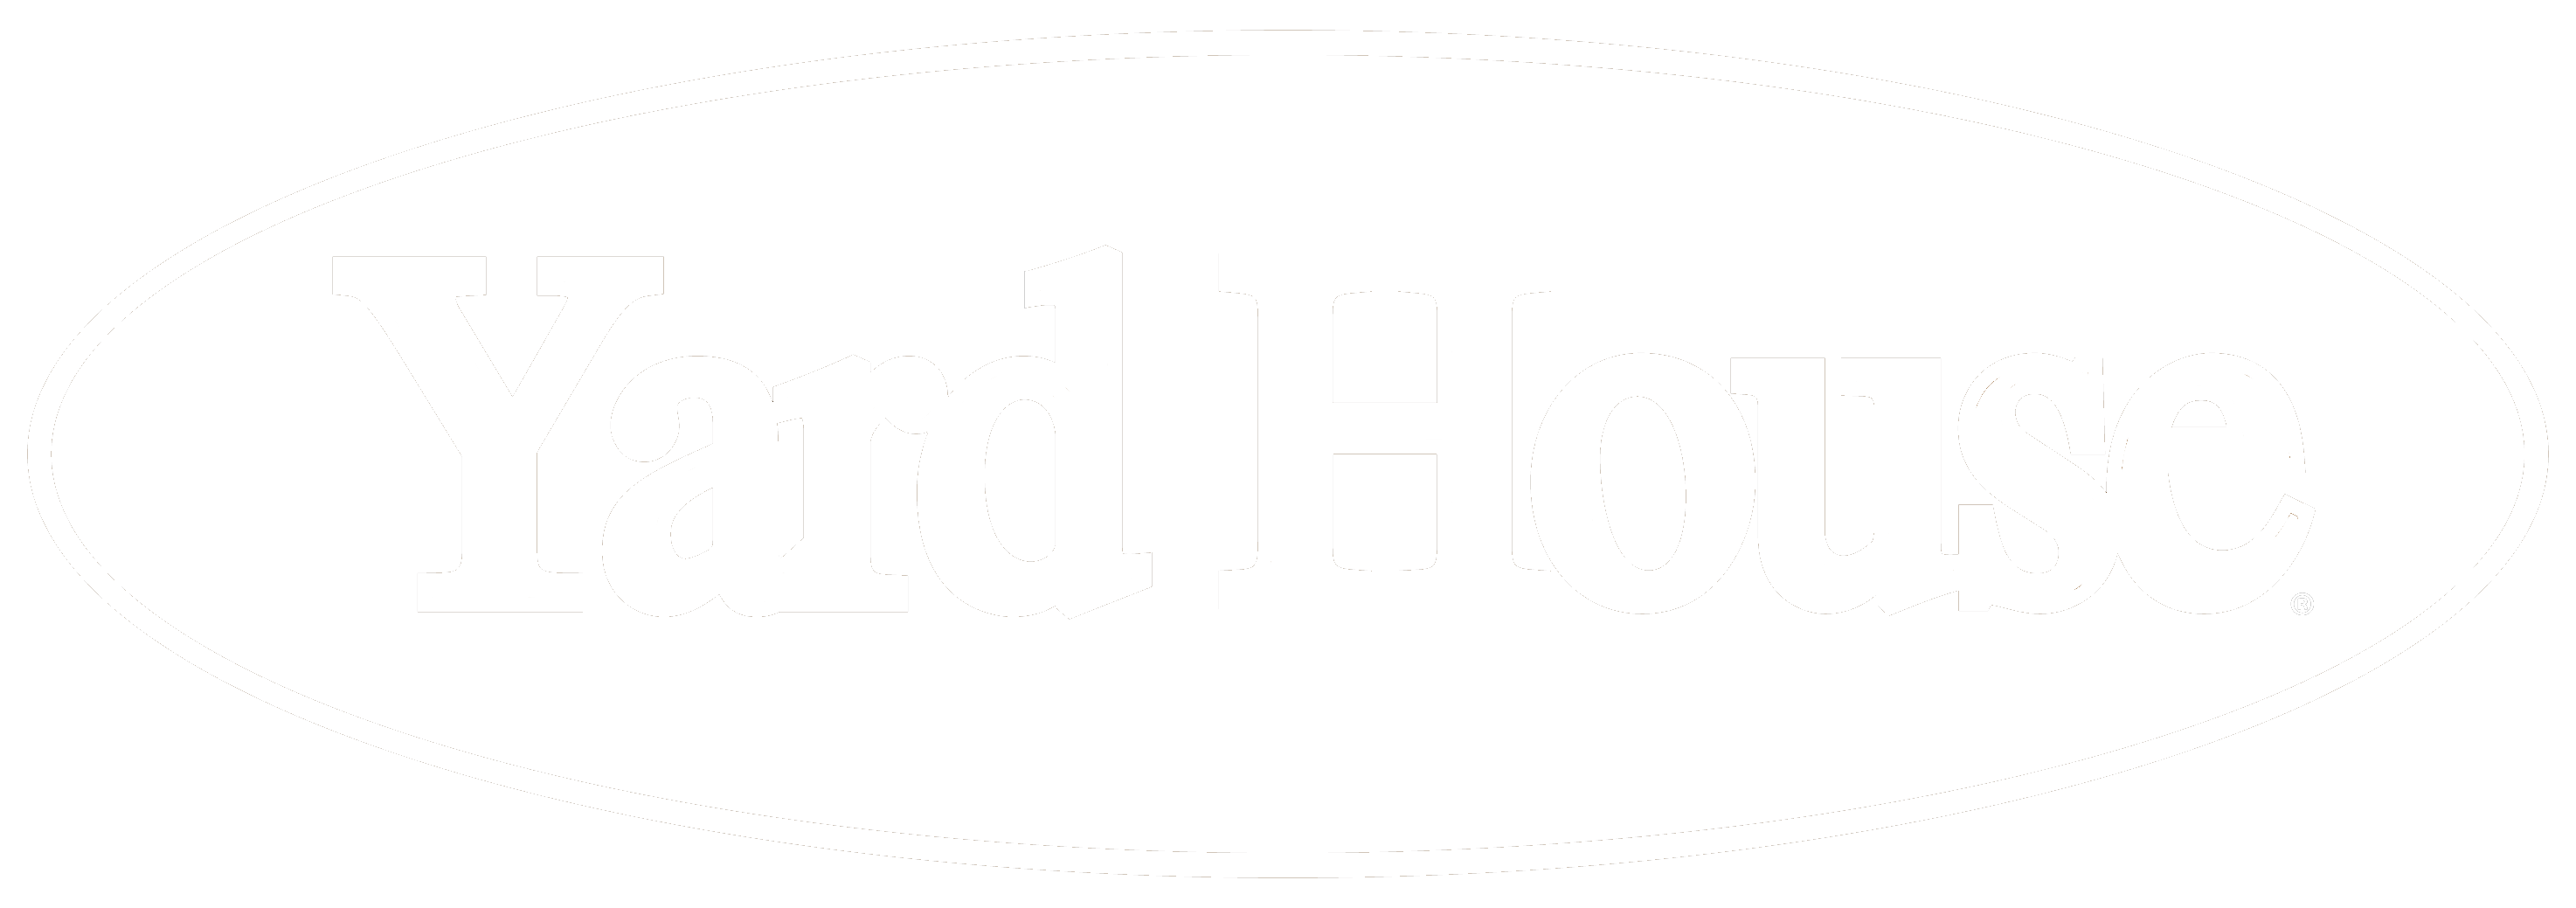 Yard House Logo - Power & Light District